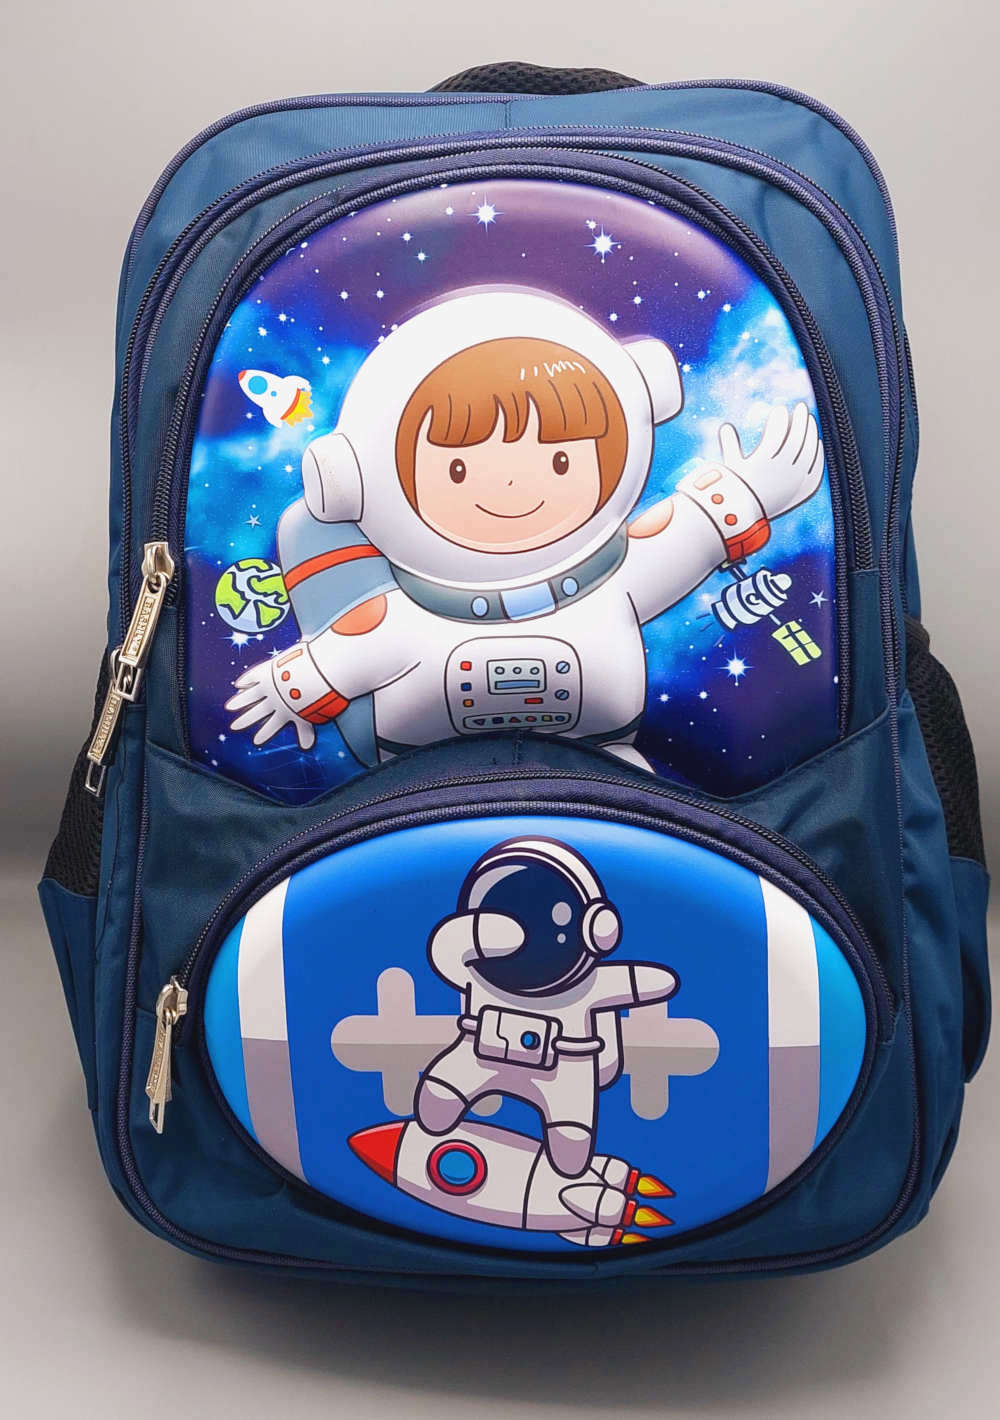 Rline Premium Collection - Audi Children's School Bag 3D Car Model Backpack  𝗗𝗲𝘀𝗰𝗿𝗶𝗽𝘁𝗶𝗼𝗻: 𝗢𝗿𝗶𝗴𝗶𝗻𝗮𝗹 𝗔𝘂𝗱𝗶 𝗖𝗵𝗶𝗹𝗱𝗿𝗲𝗻 𝗦𝗰𝗵𝗼𝗼𝗹  𝗯𝗮𝗴 𝘄𝗶𝘁𝗵 𝗿𝗲𝗳𝗹𝗲𝗰𝘁𝗶𝘃𝗲 𝗺𝗮𝘁𝗲𝗿𝗶𝗮𝗹 𝗼𝗻 𝗯𝗮𝗴  (𝘄𝗶𝗻𝗱𝘀𝗰𝗿𝗲𝗲𝗻). 𝘛𝘩𝘦 ...